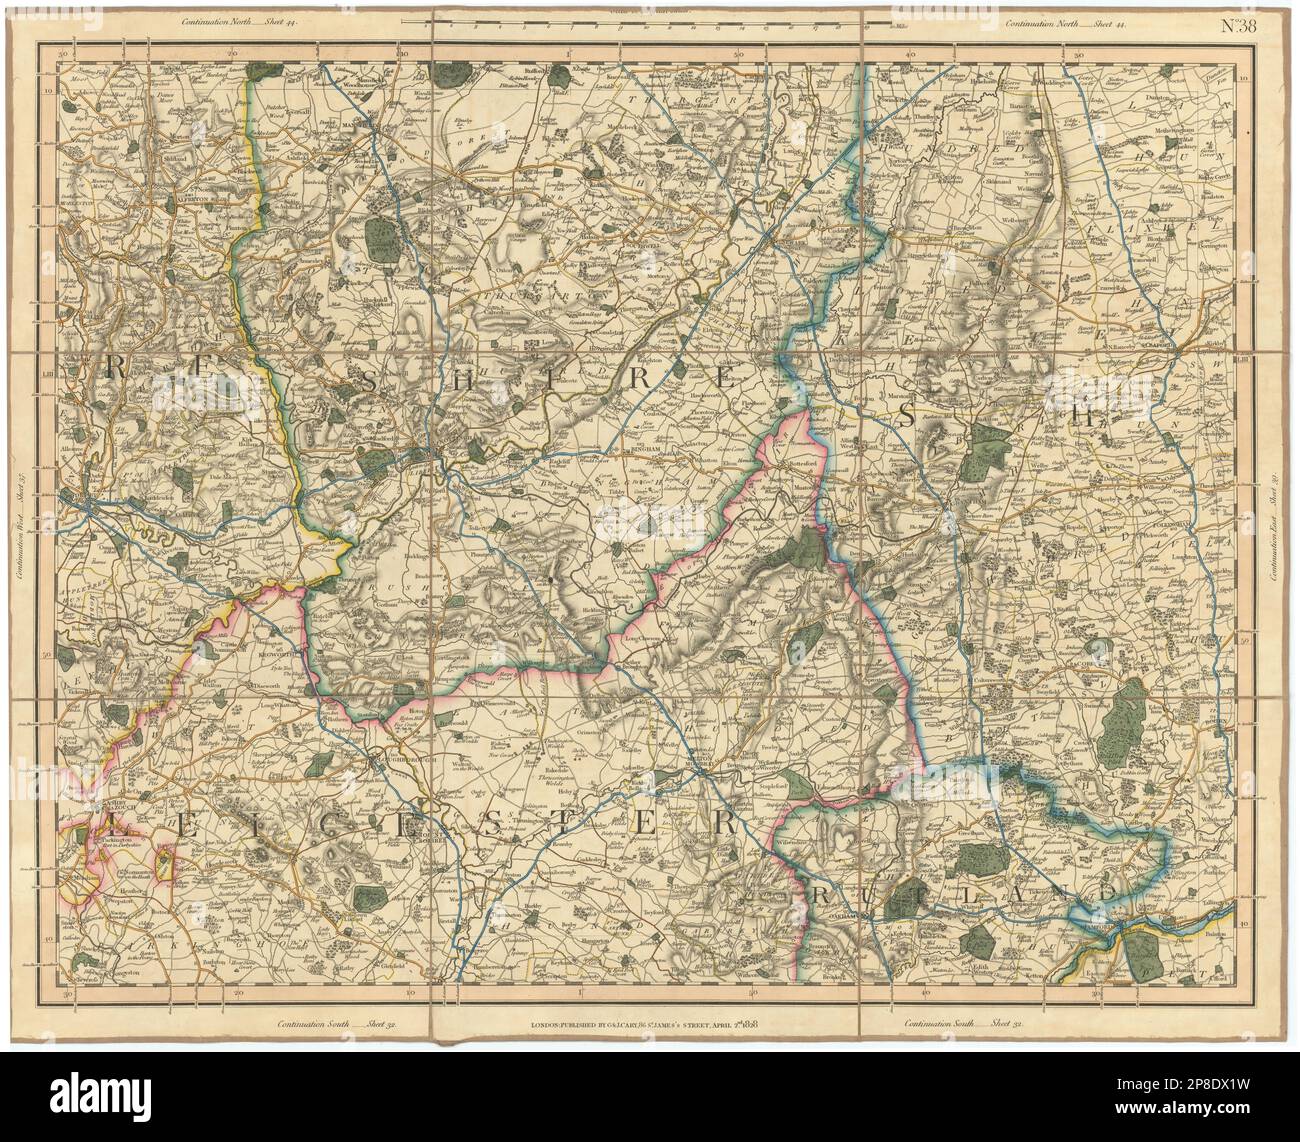 MIDLANDS ORIENTALI. Leicestershire Rutland Nottinghamshire Lincs Derbys CARY 1832 mappa Foto Stock